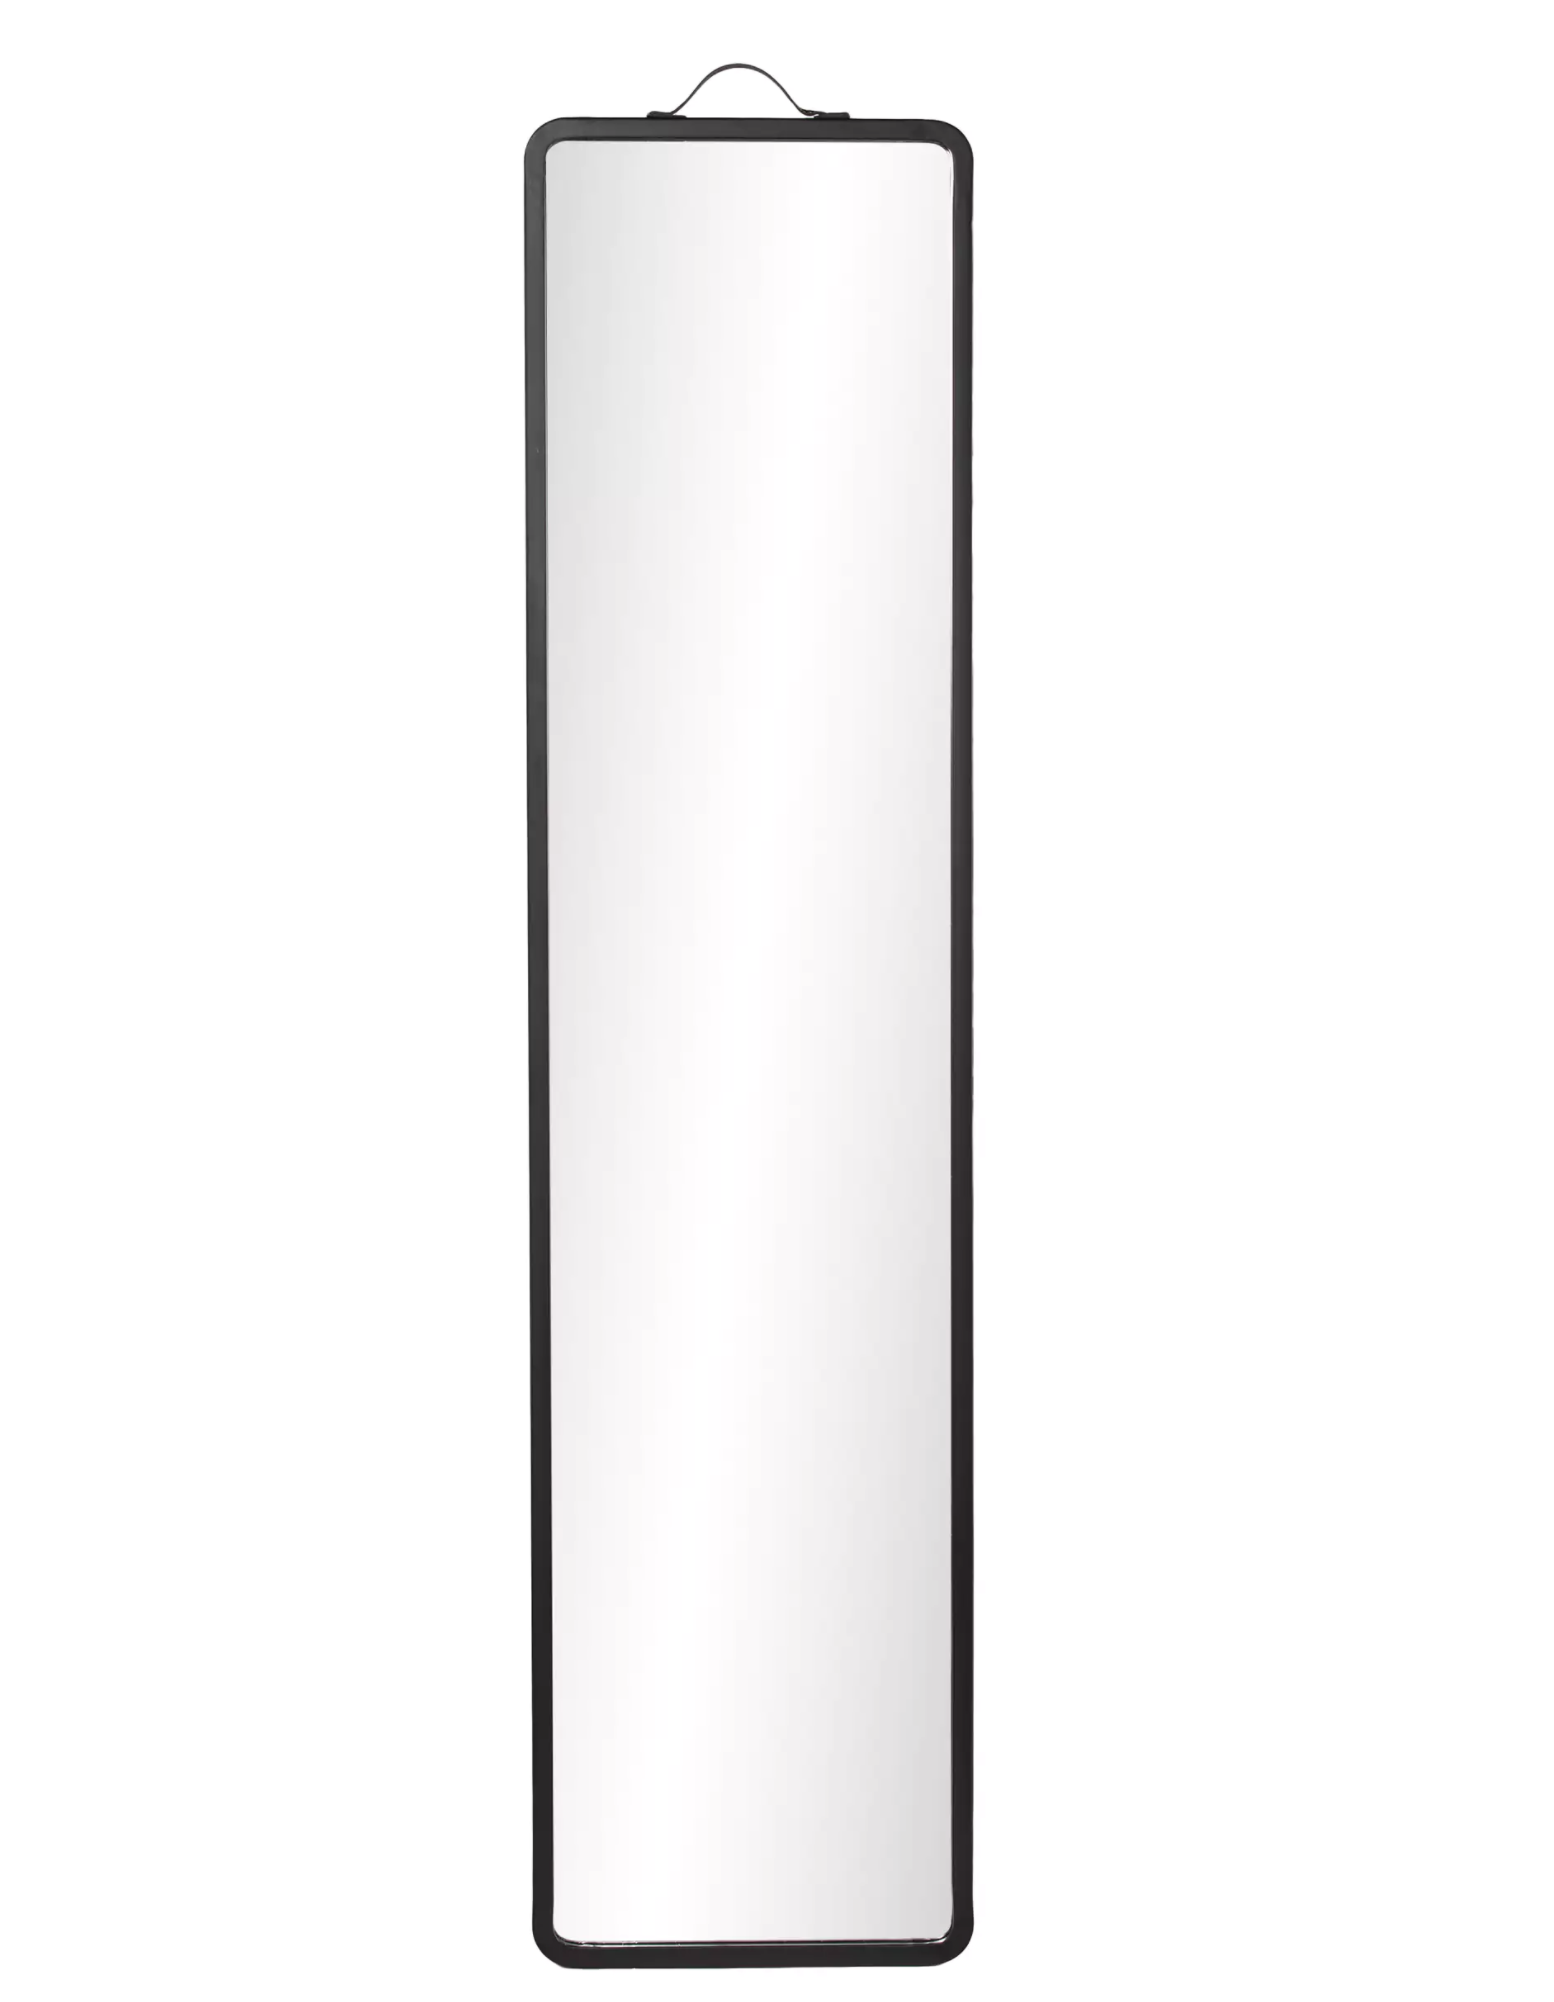 Copy of Copy of Copy of Copy of Overstock Floor Length Mirror